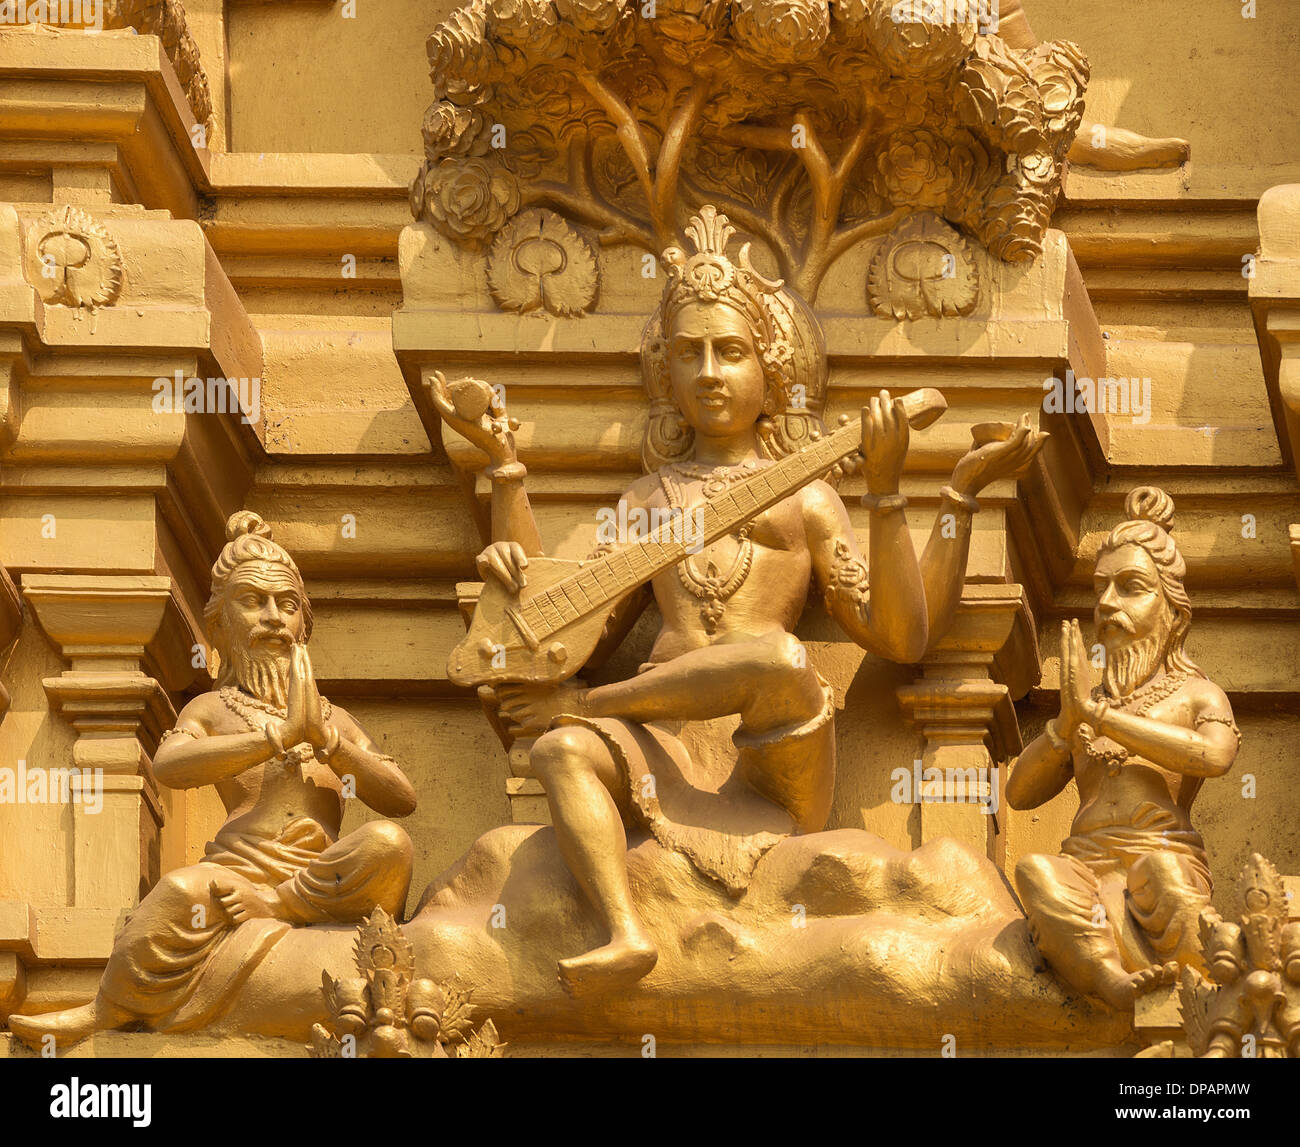 Detail of statues on the golden entrance tower at Sri Naheshwara in Bengaluru: Saraswati, goddess of knowledge and education. Stock Photo